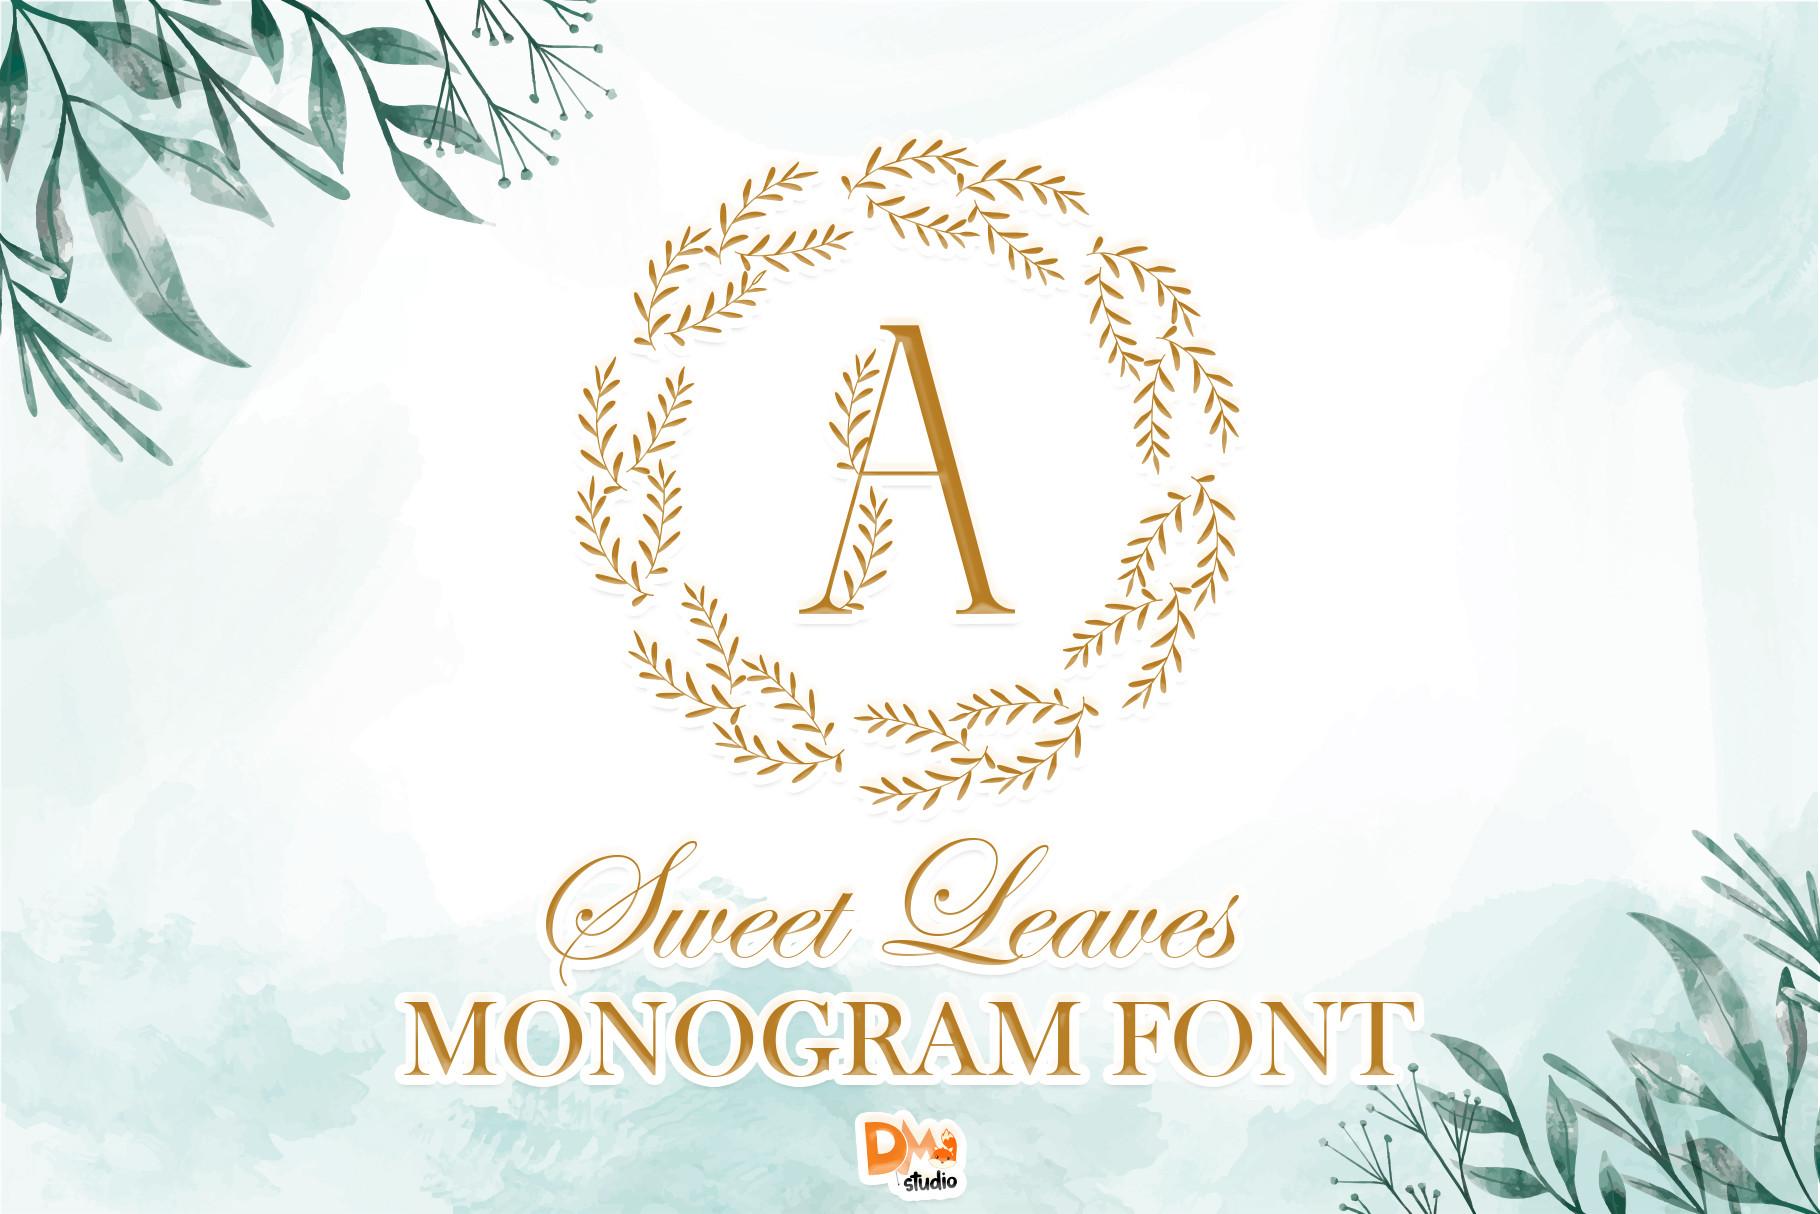 Sweet Leaves Monogram Font